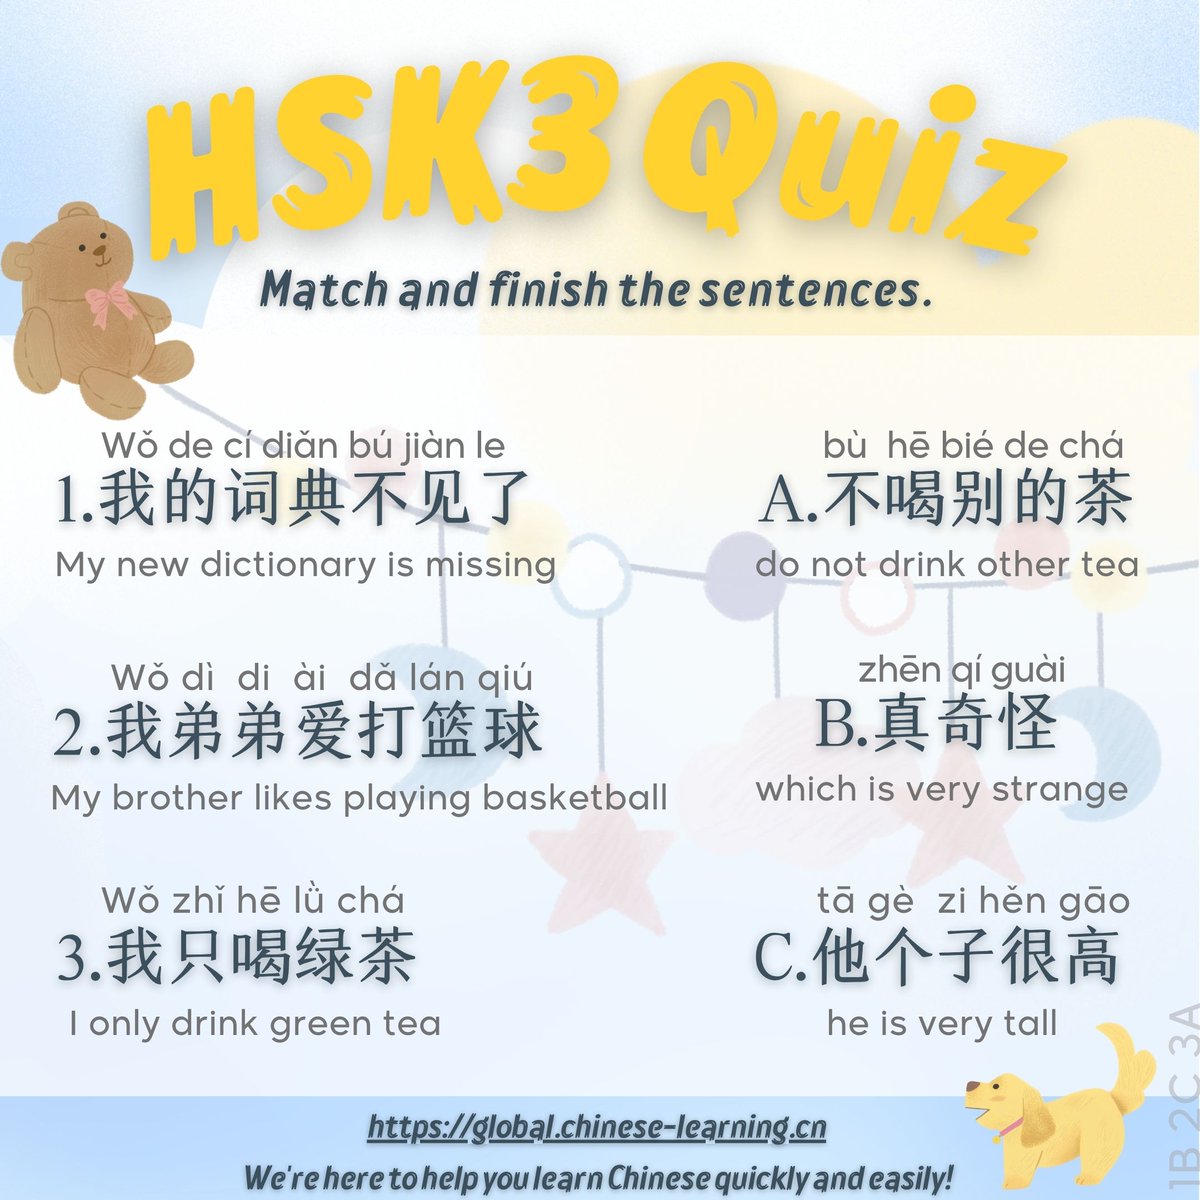 HSK3 Quiz Match and finish the sentences #中文学习 #汉语 #studytwt #hsktest #学中文 #learnchinese #mandarin #学汉语 #Chineselearning #learnchinese